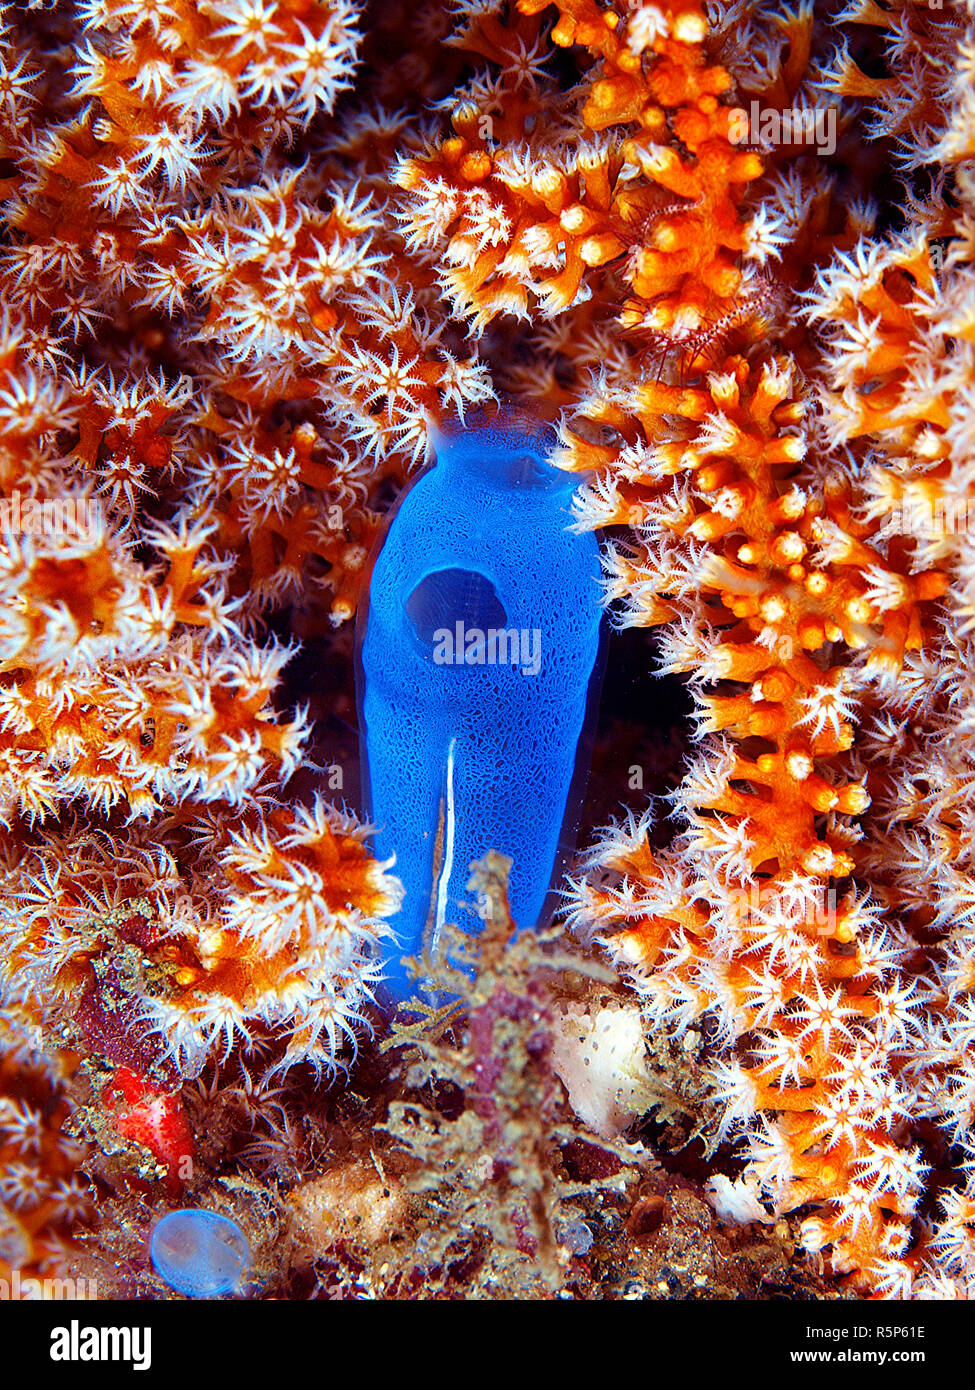 Blue sea squirt Rhopalaea crassa), between polyps of a red seafan (Gorgonacea), Tubbataha National Park, Palawan, Philippines Stock Photo